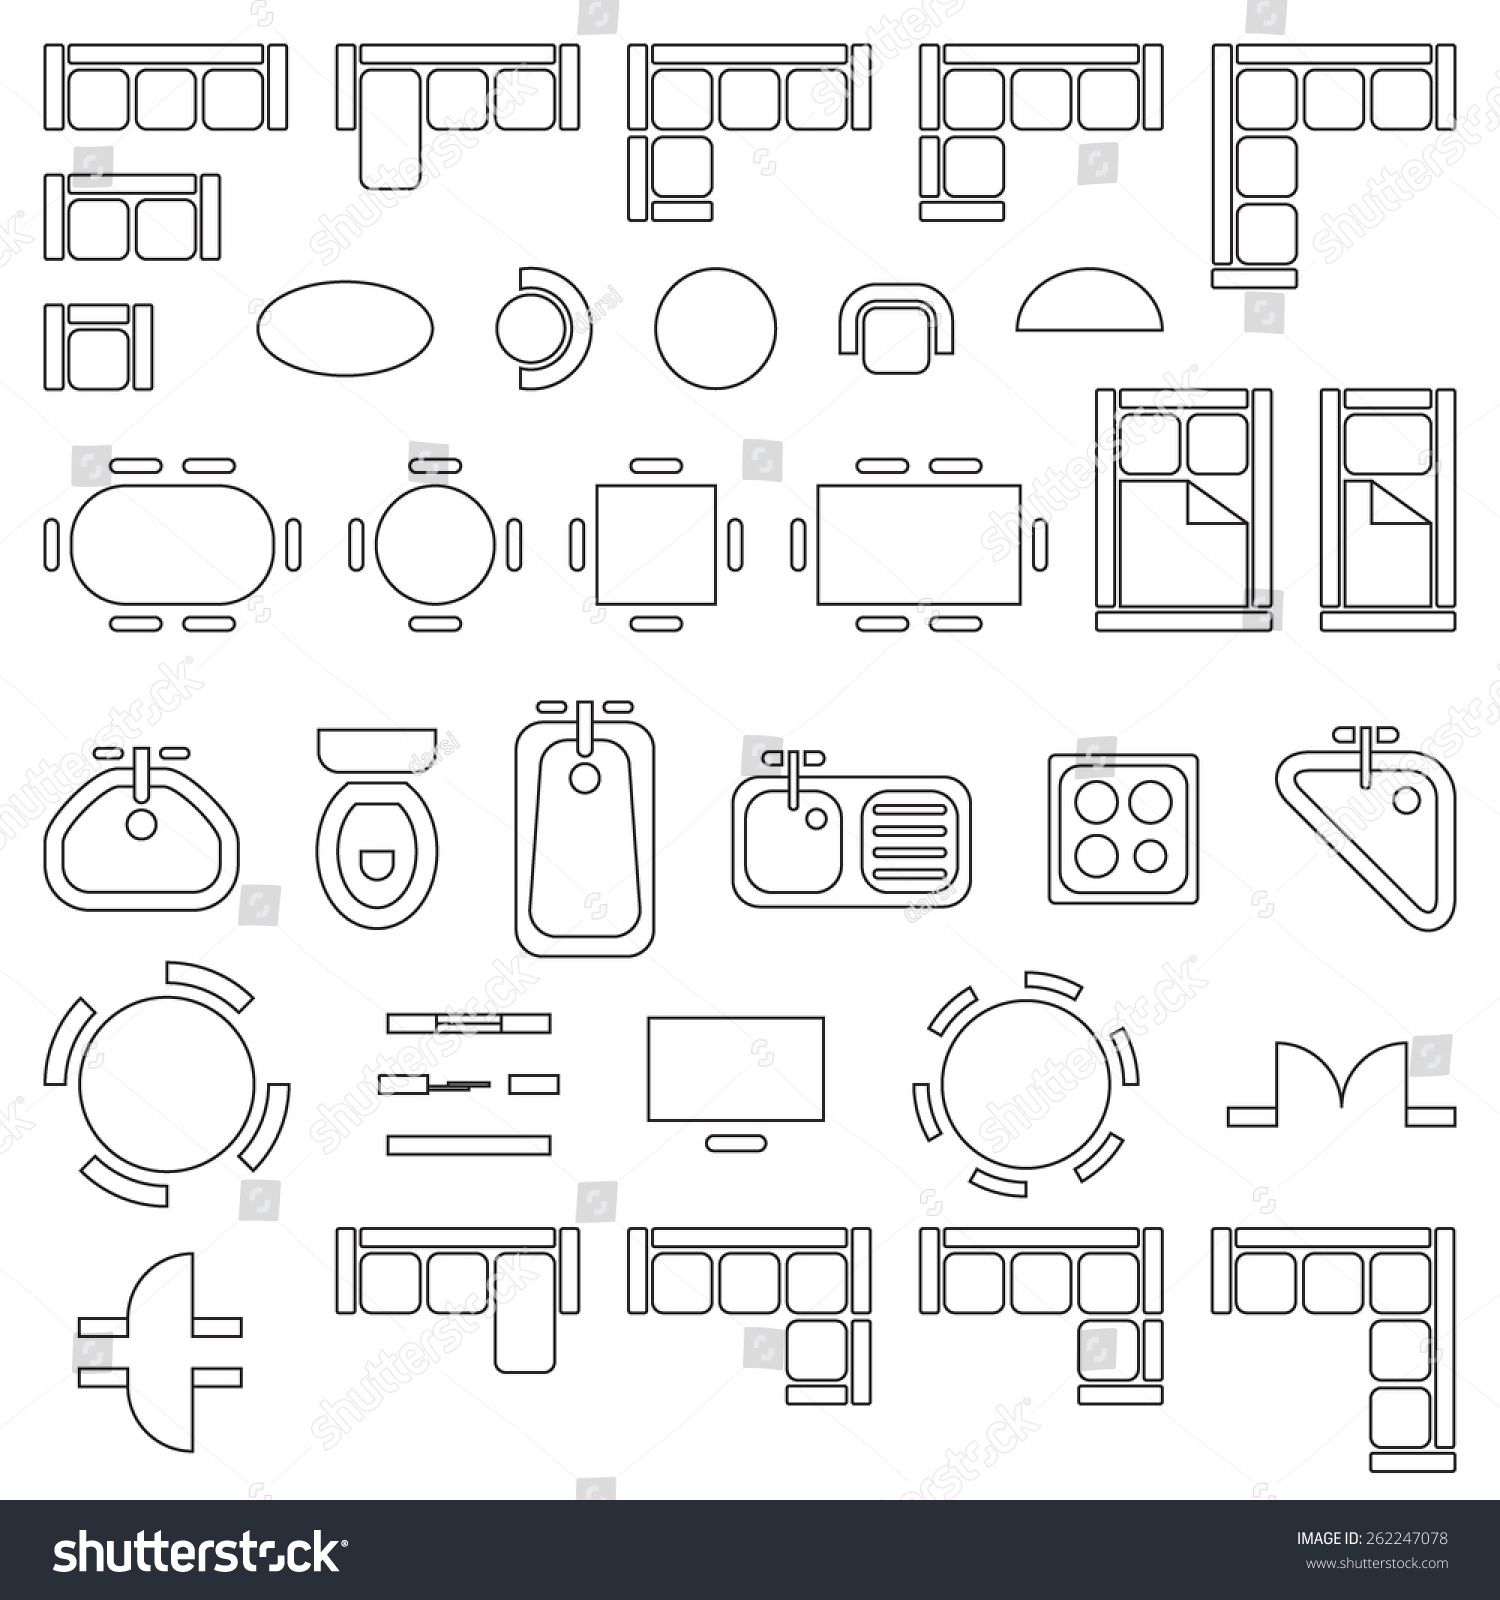 clip art floor plan symbols - photo #35